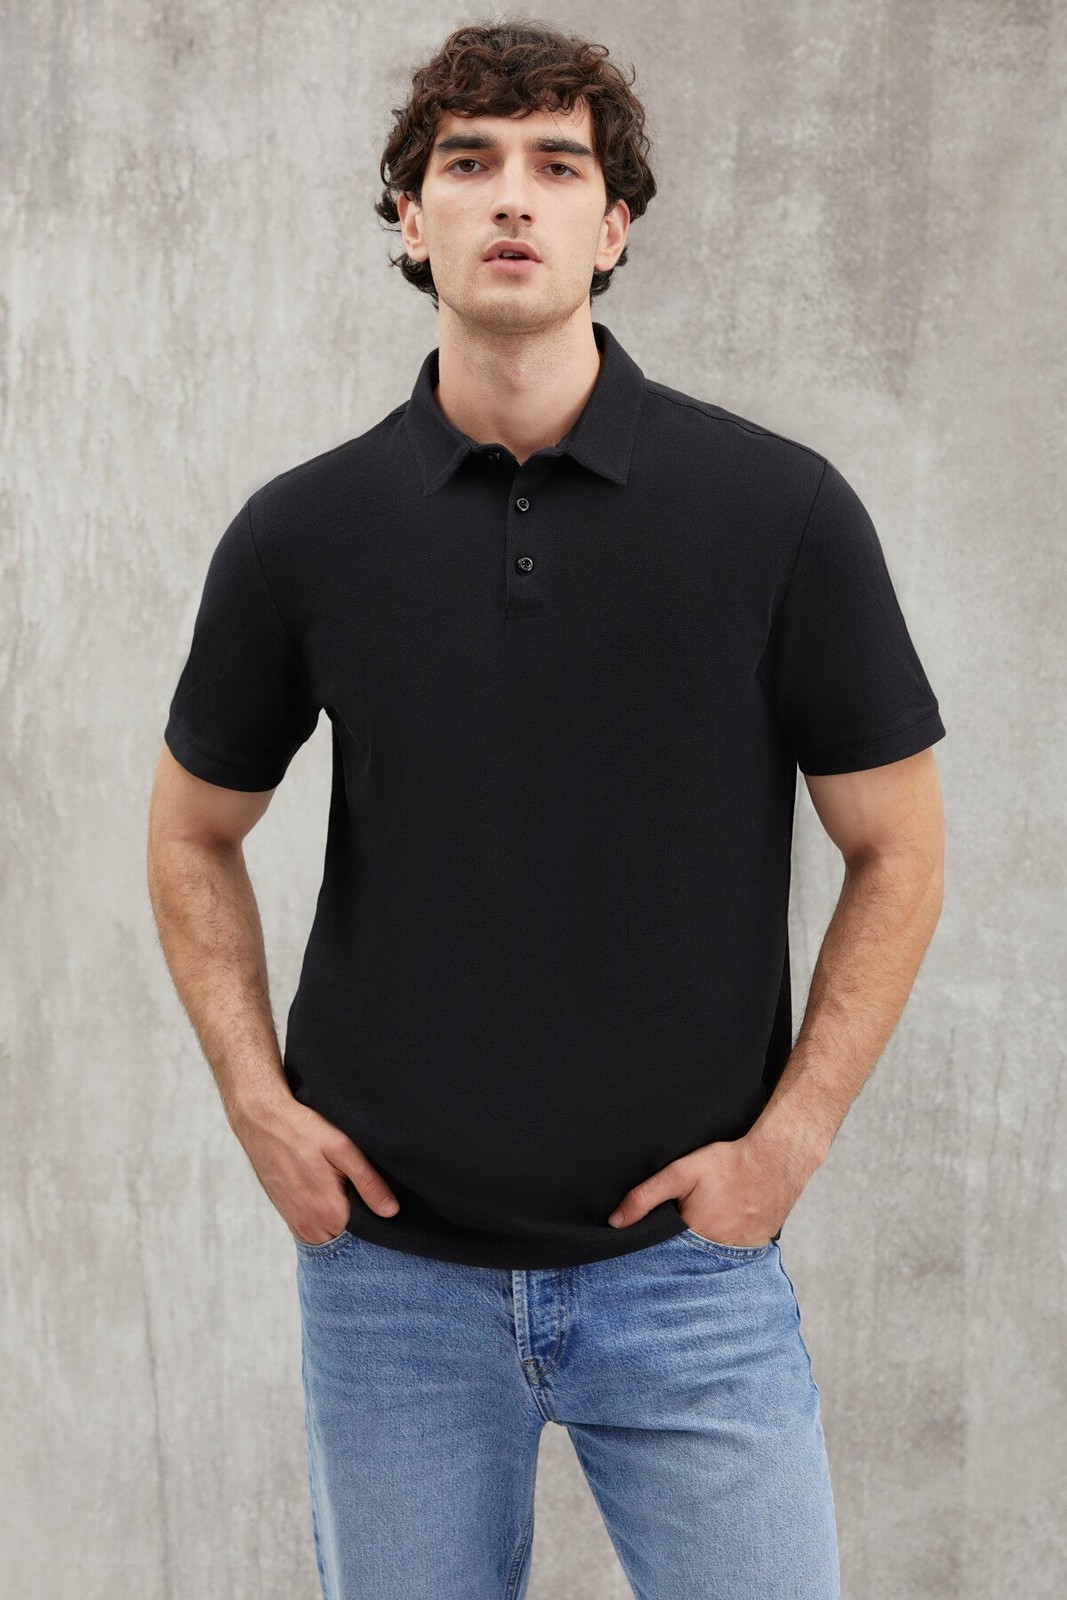 GRIMELANGE EDDIE Relaxed Black Single T-Shirt